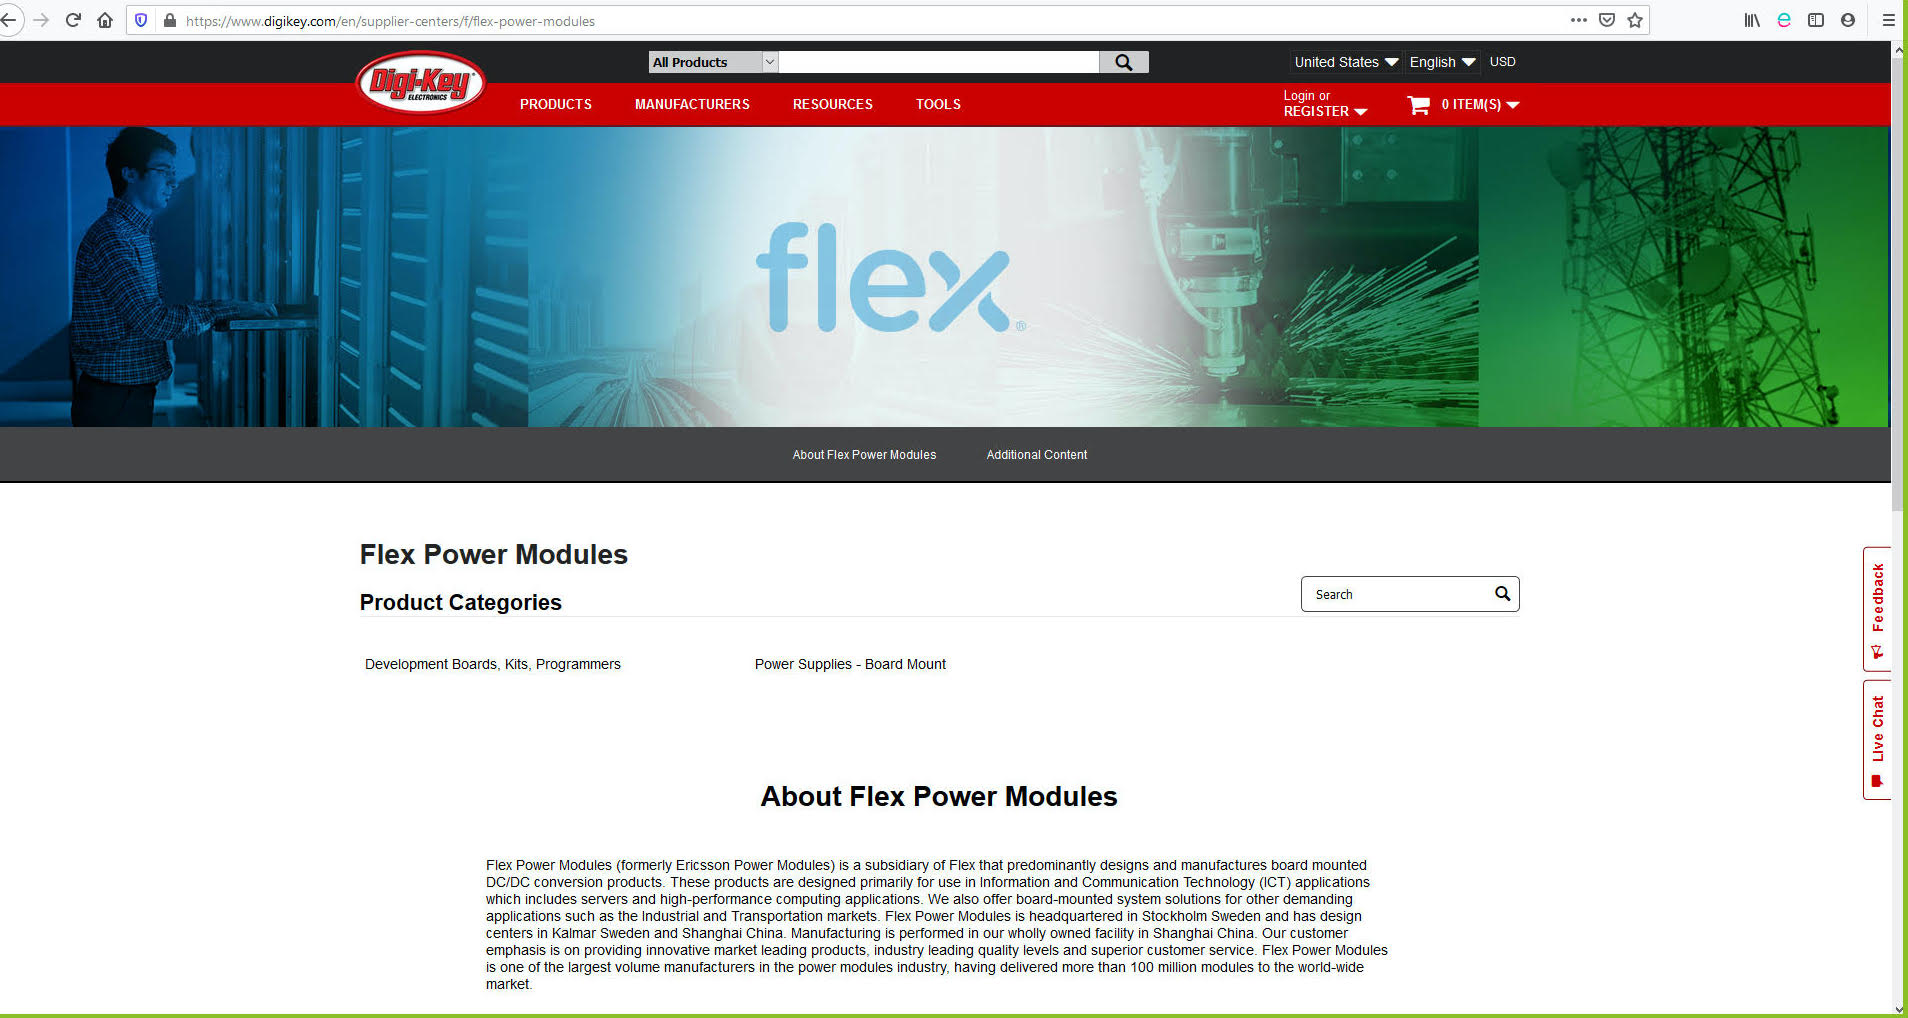 Flex Power Modules Signs Global Agreement with Digi-Key